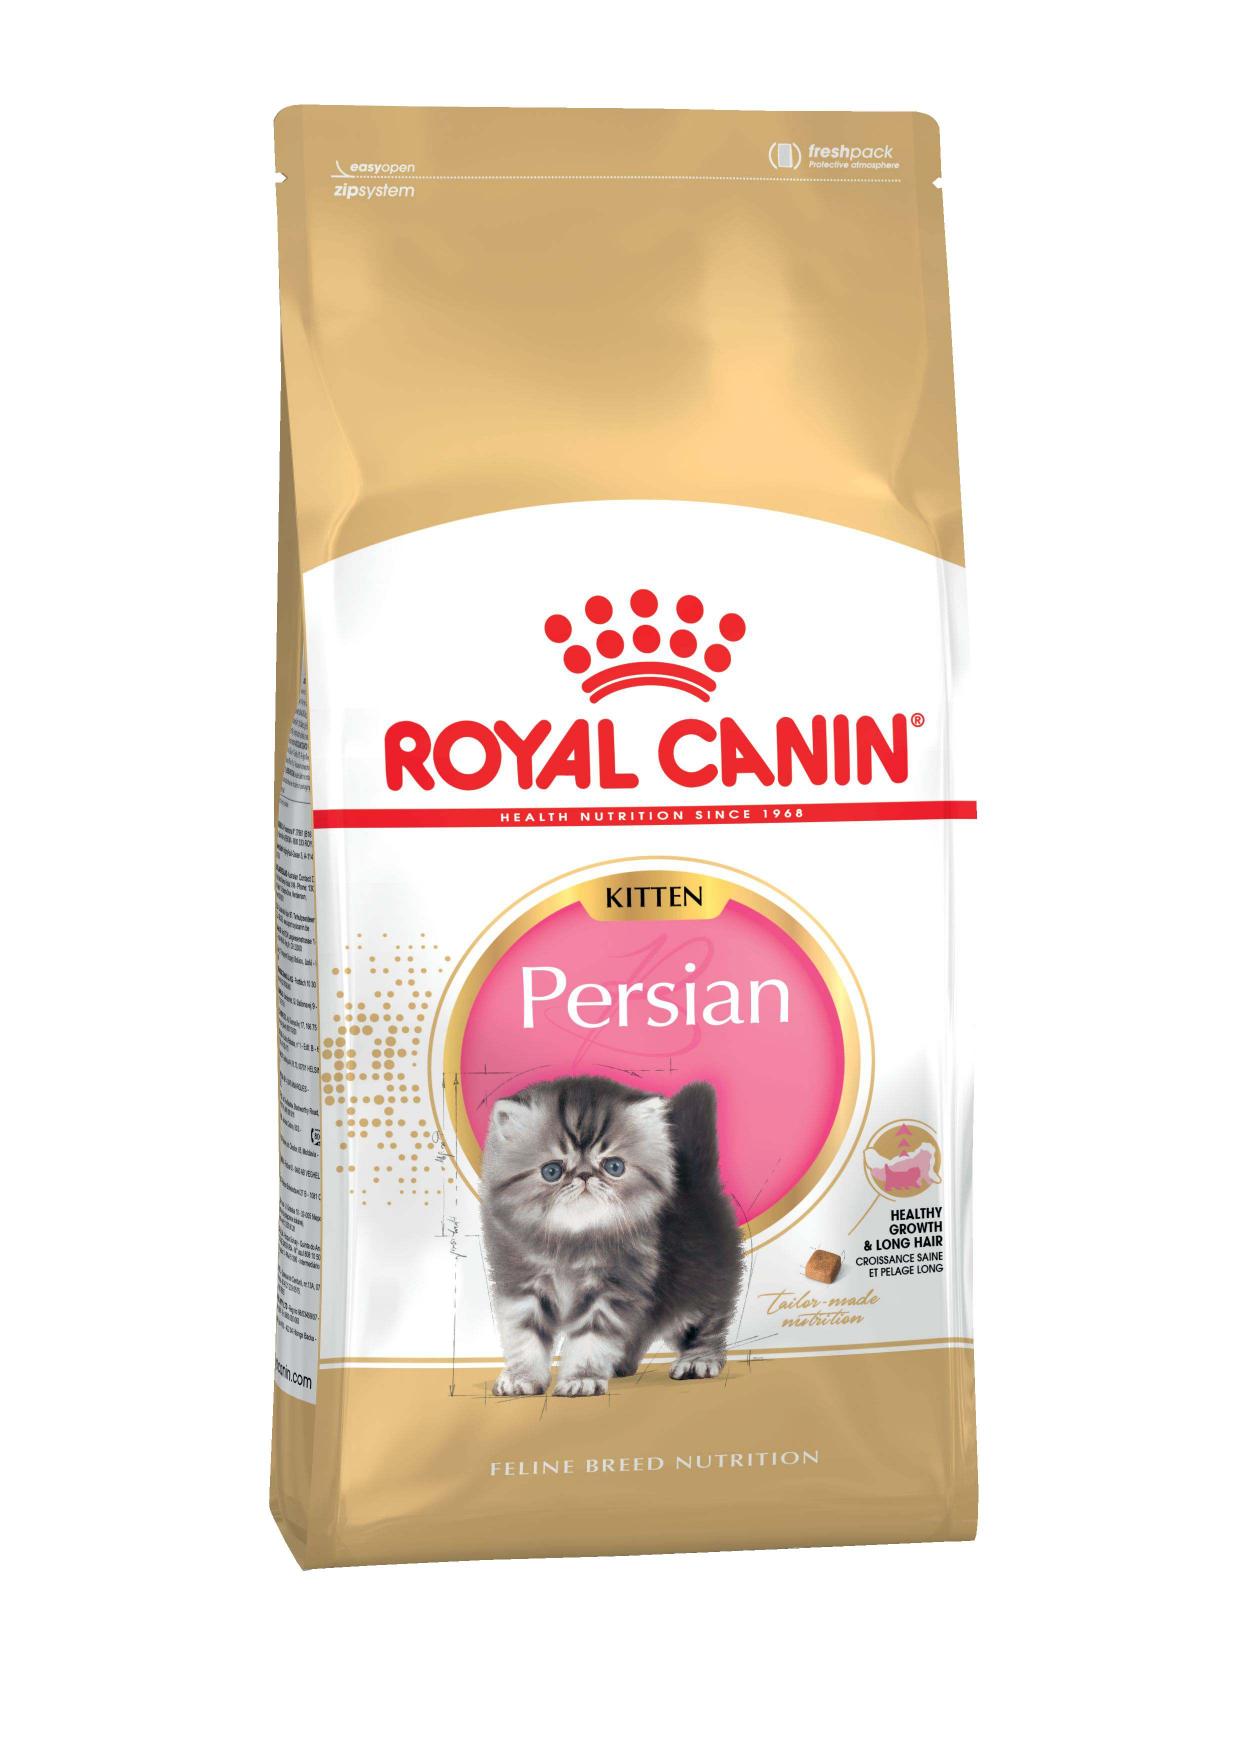 Royal Canin корм для котят Персидской породы 10 кг, 13500100395